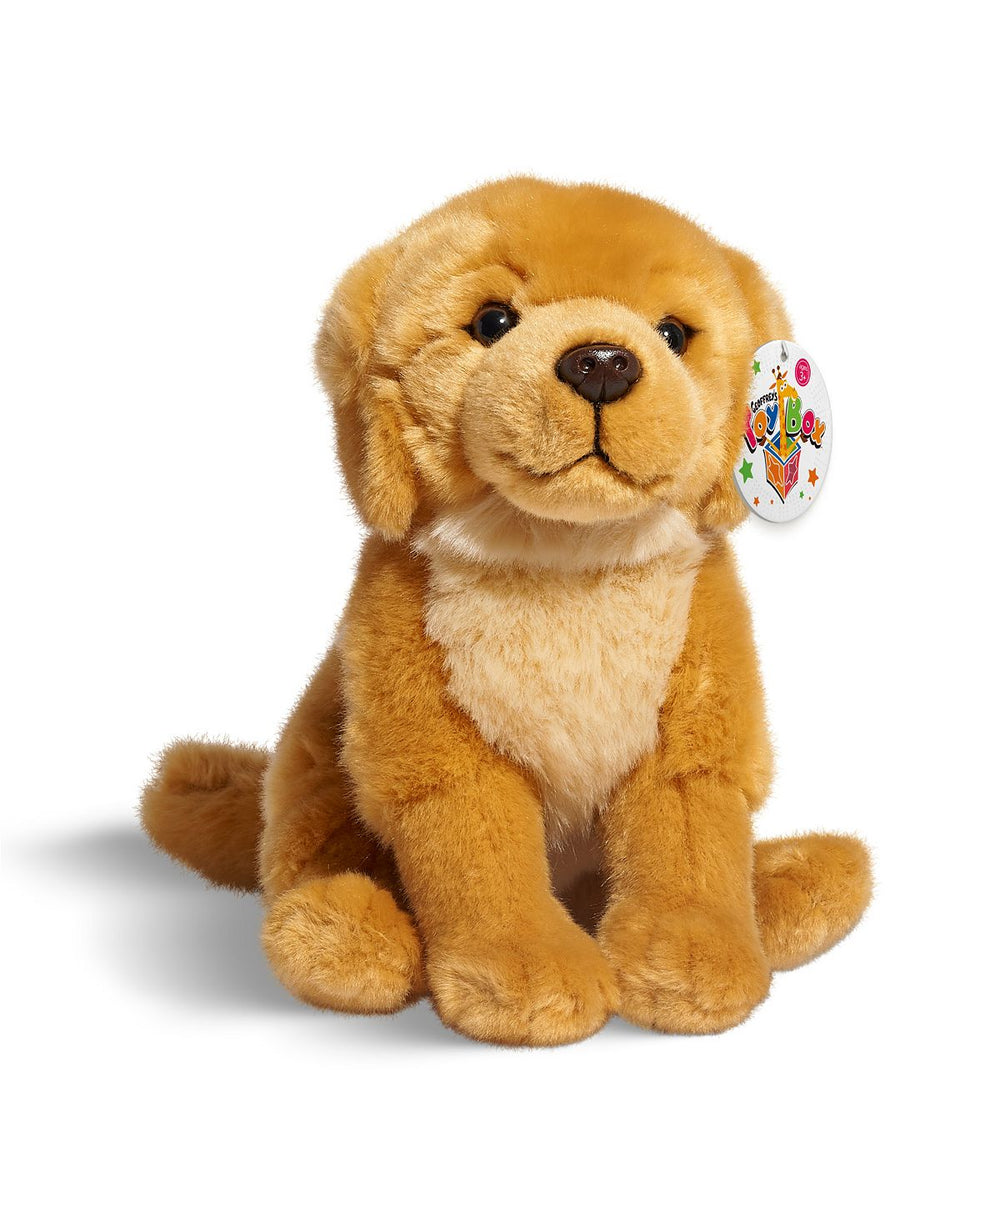 Geoffrey's Toy Box 10 inch Golden Retriever Puppy Plush Toy - Exclusive to Macy's